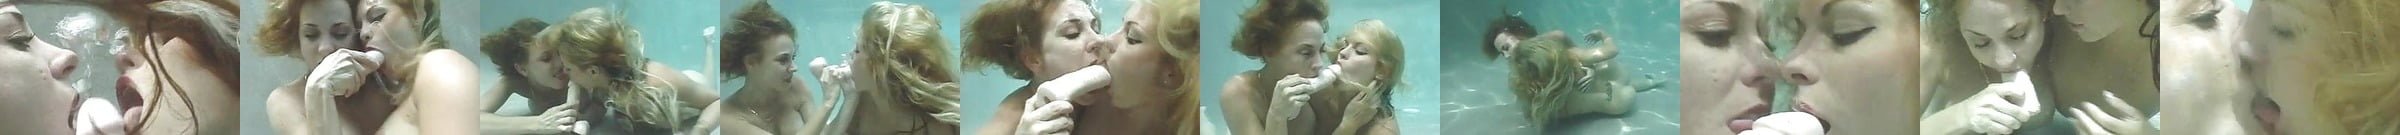 Polecane Filmy Porno Underwater Lesbian Xhamster